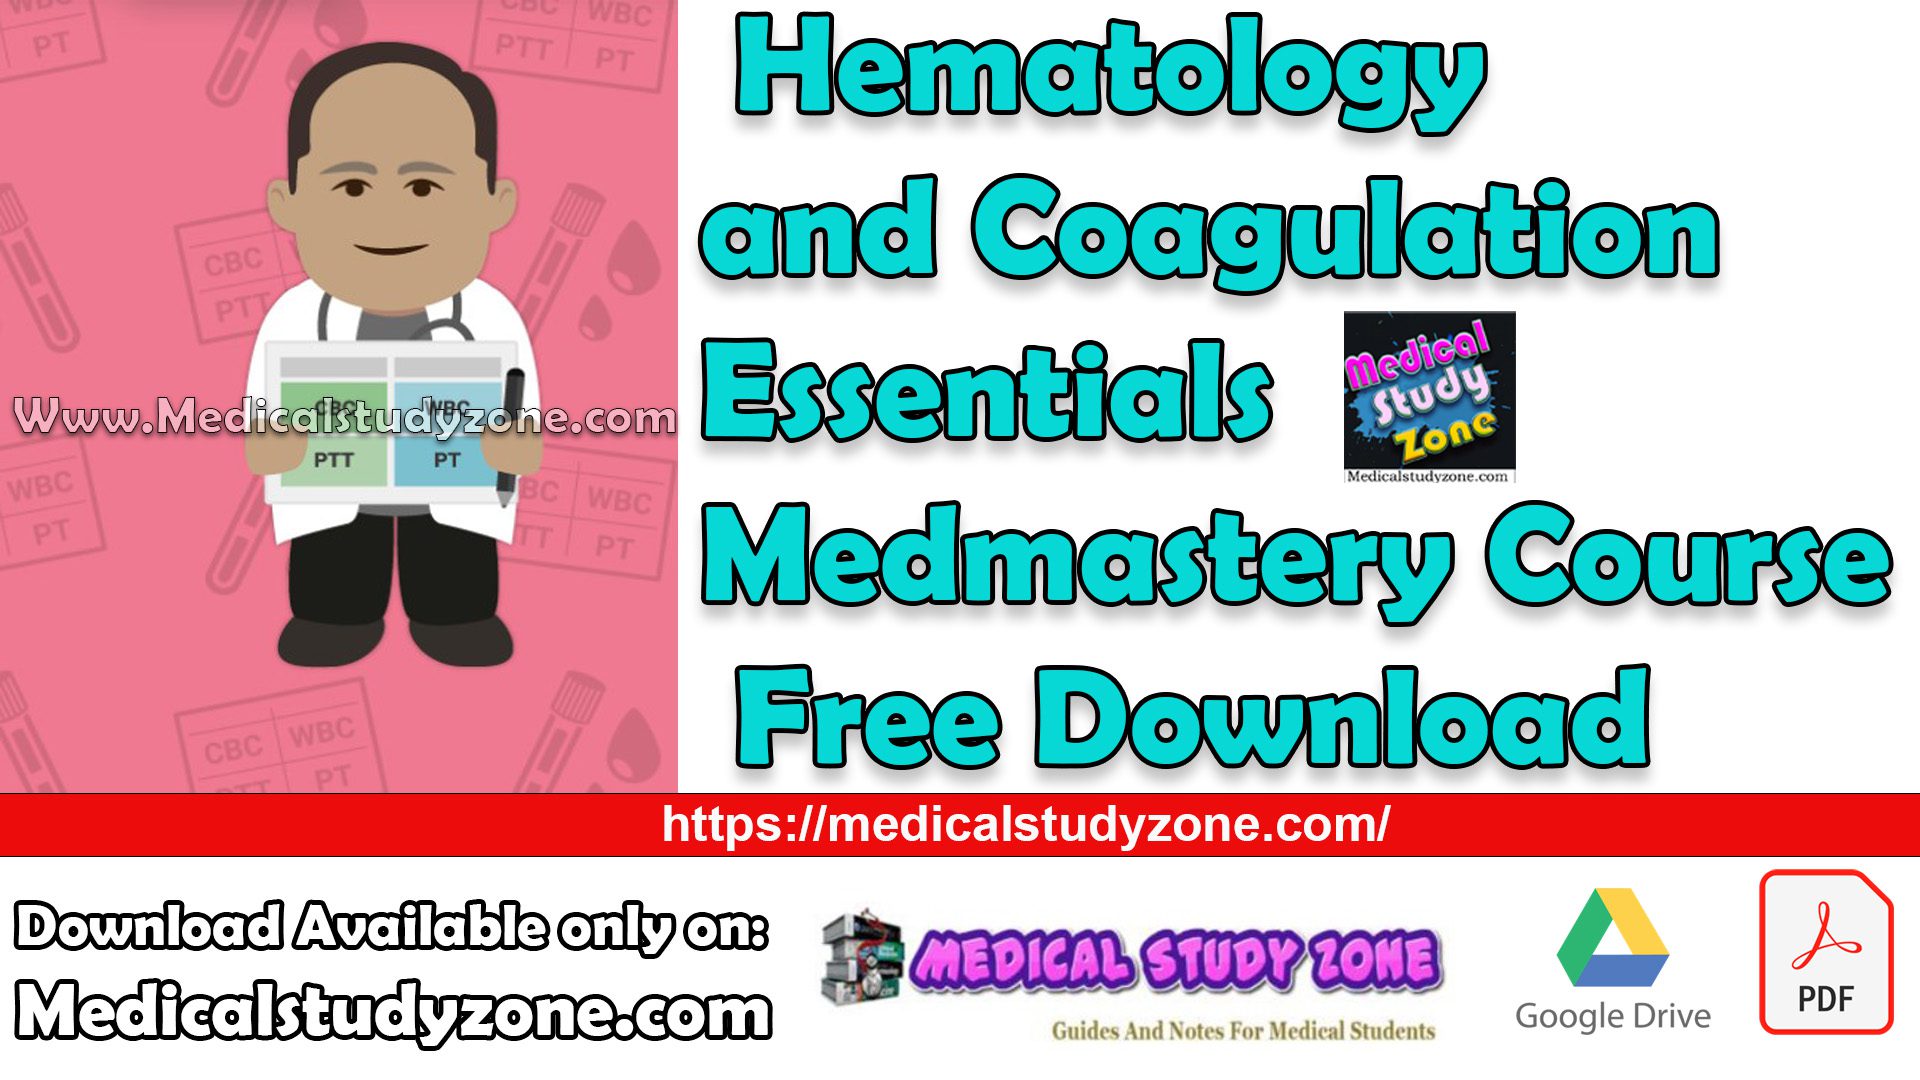 Hematology and Coagulation Essentials Medmastery Course Free Download